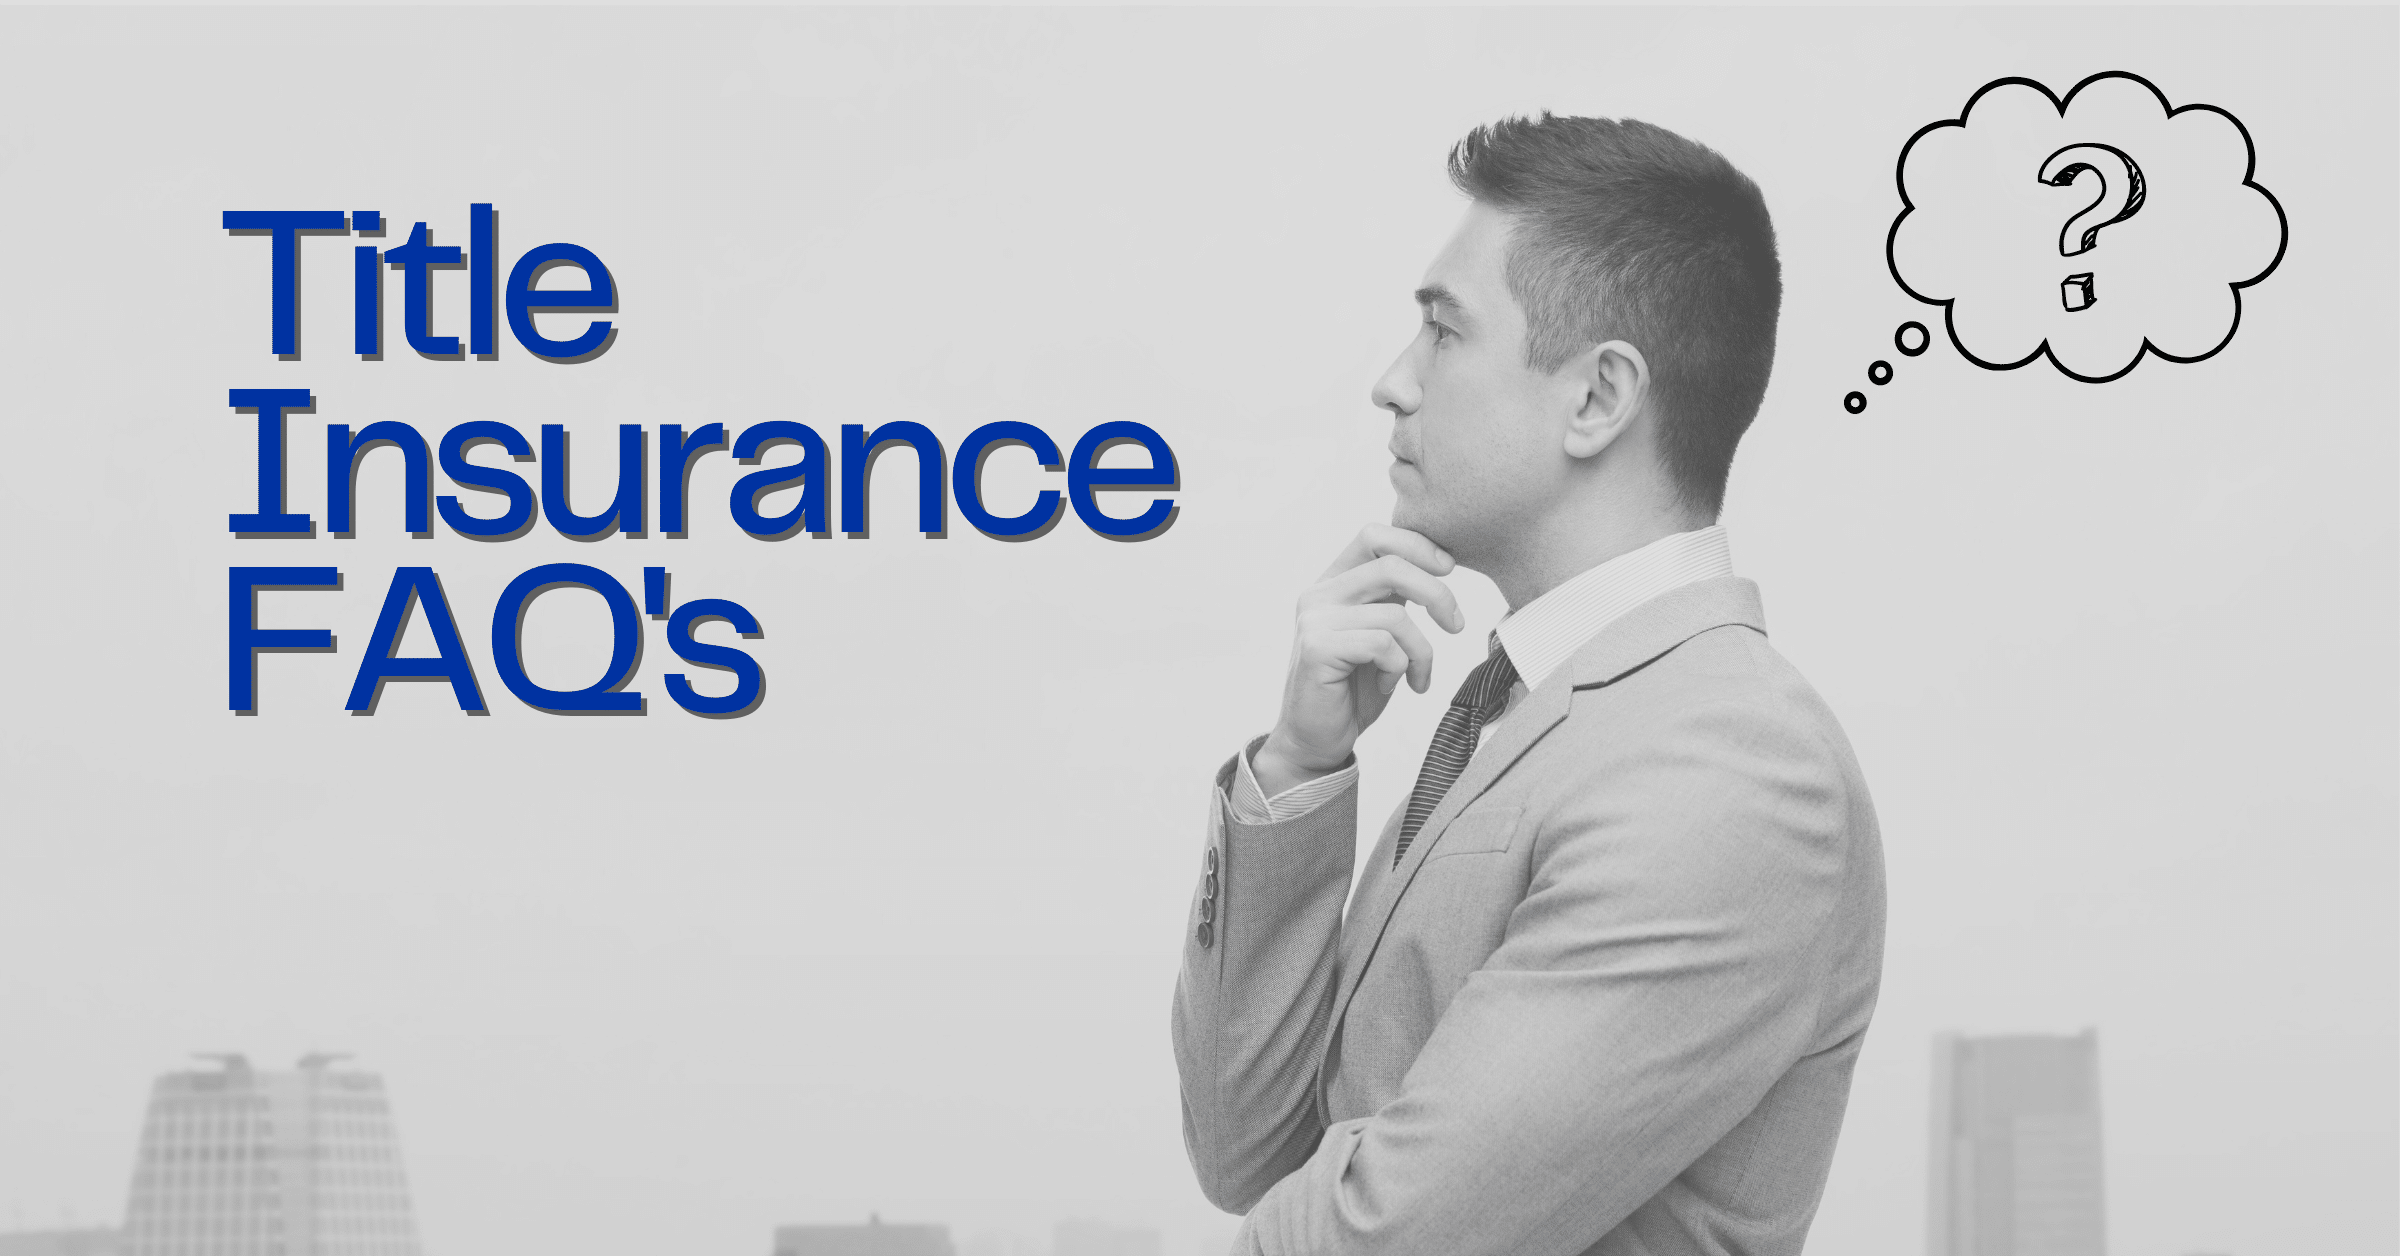 Title Insurance FAQ's blog post graphic